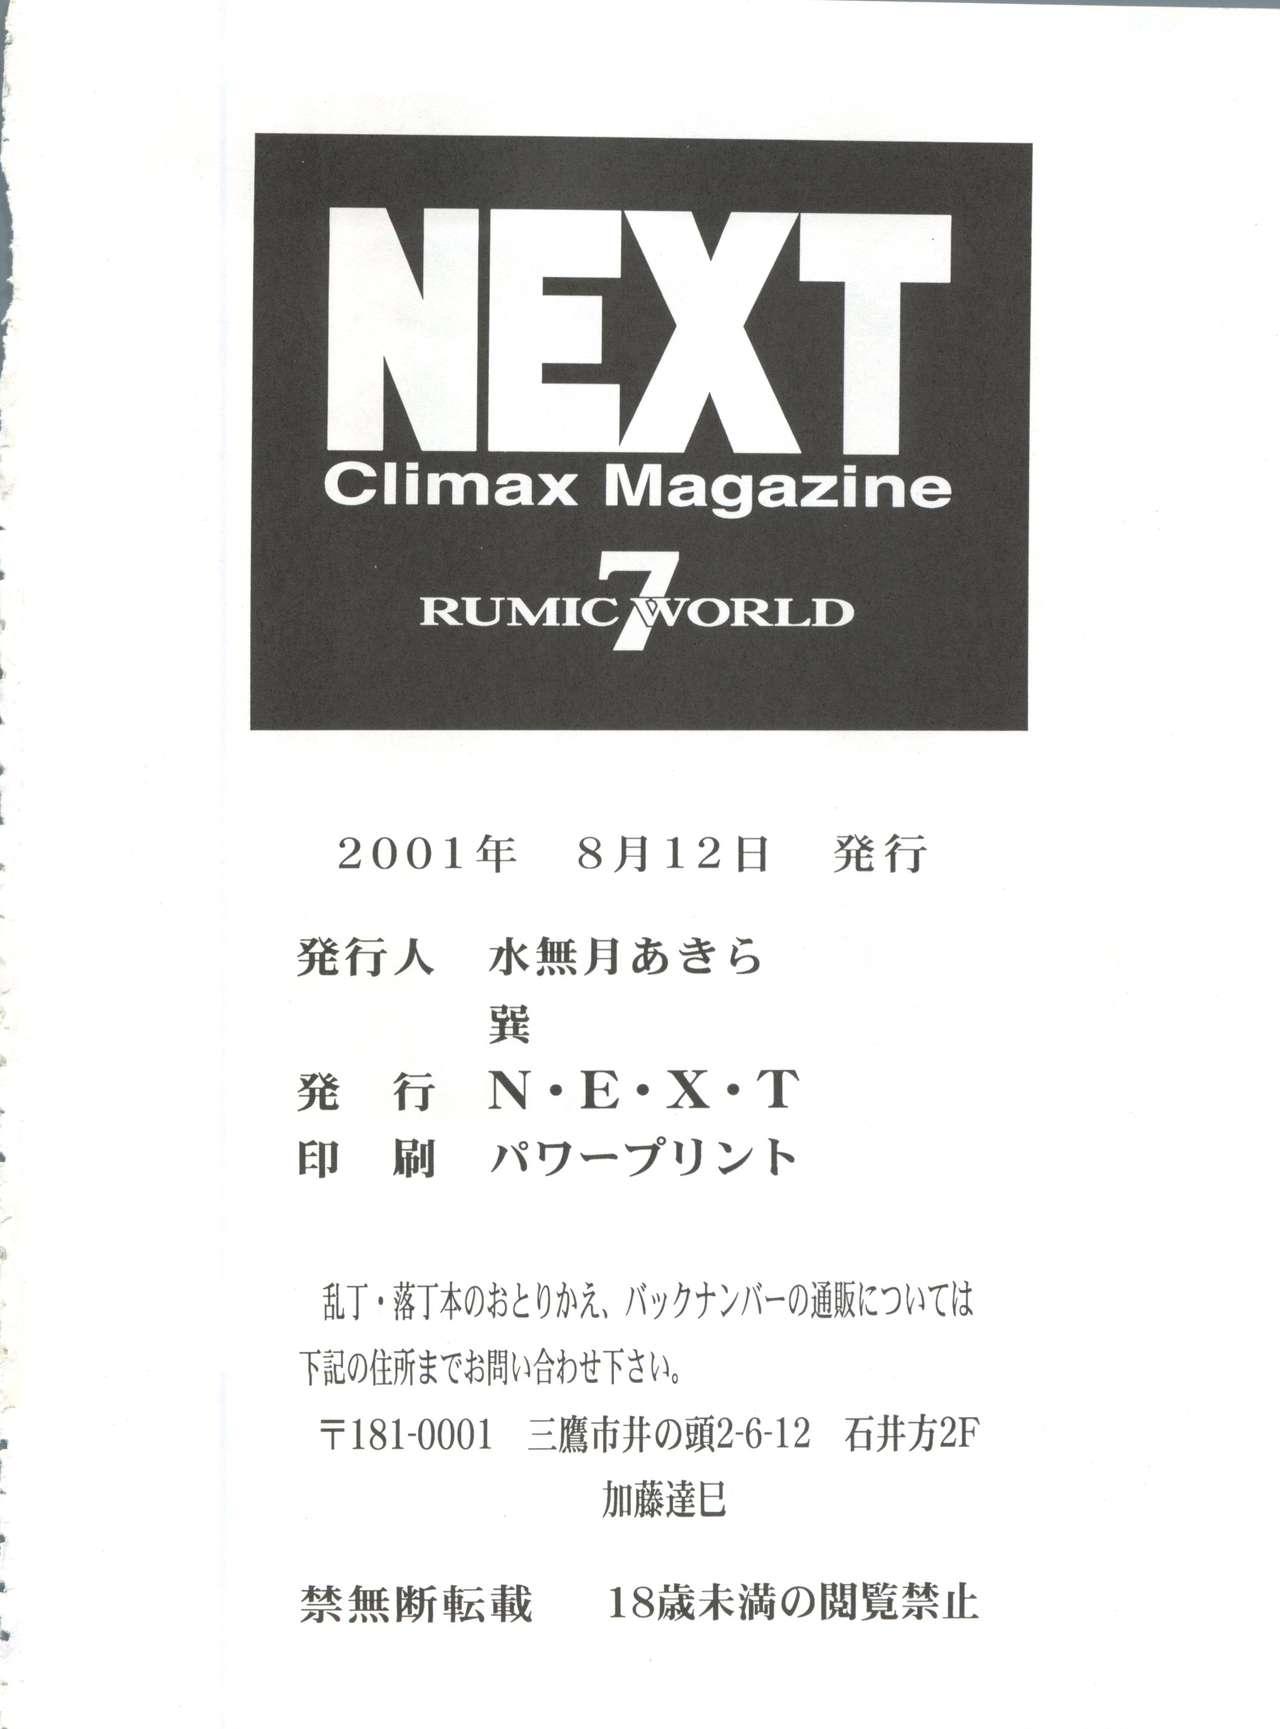 NEXT Climax Magazine 7 - RUMIC WORLD 97